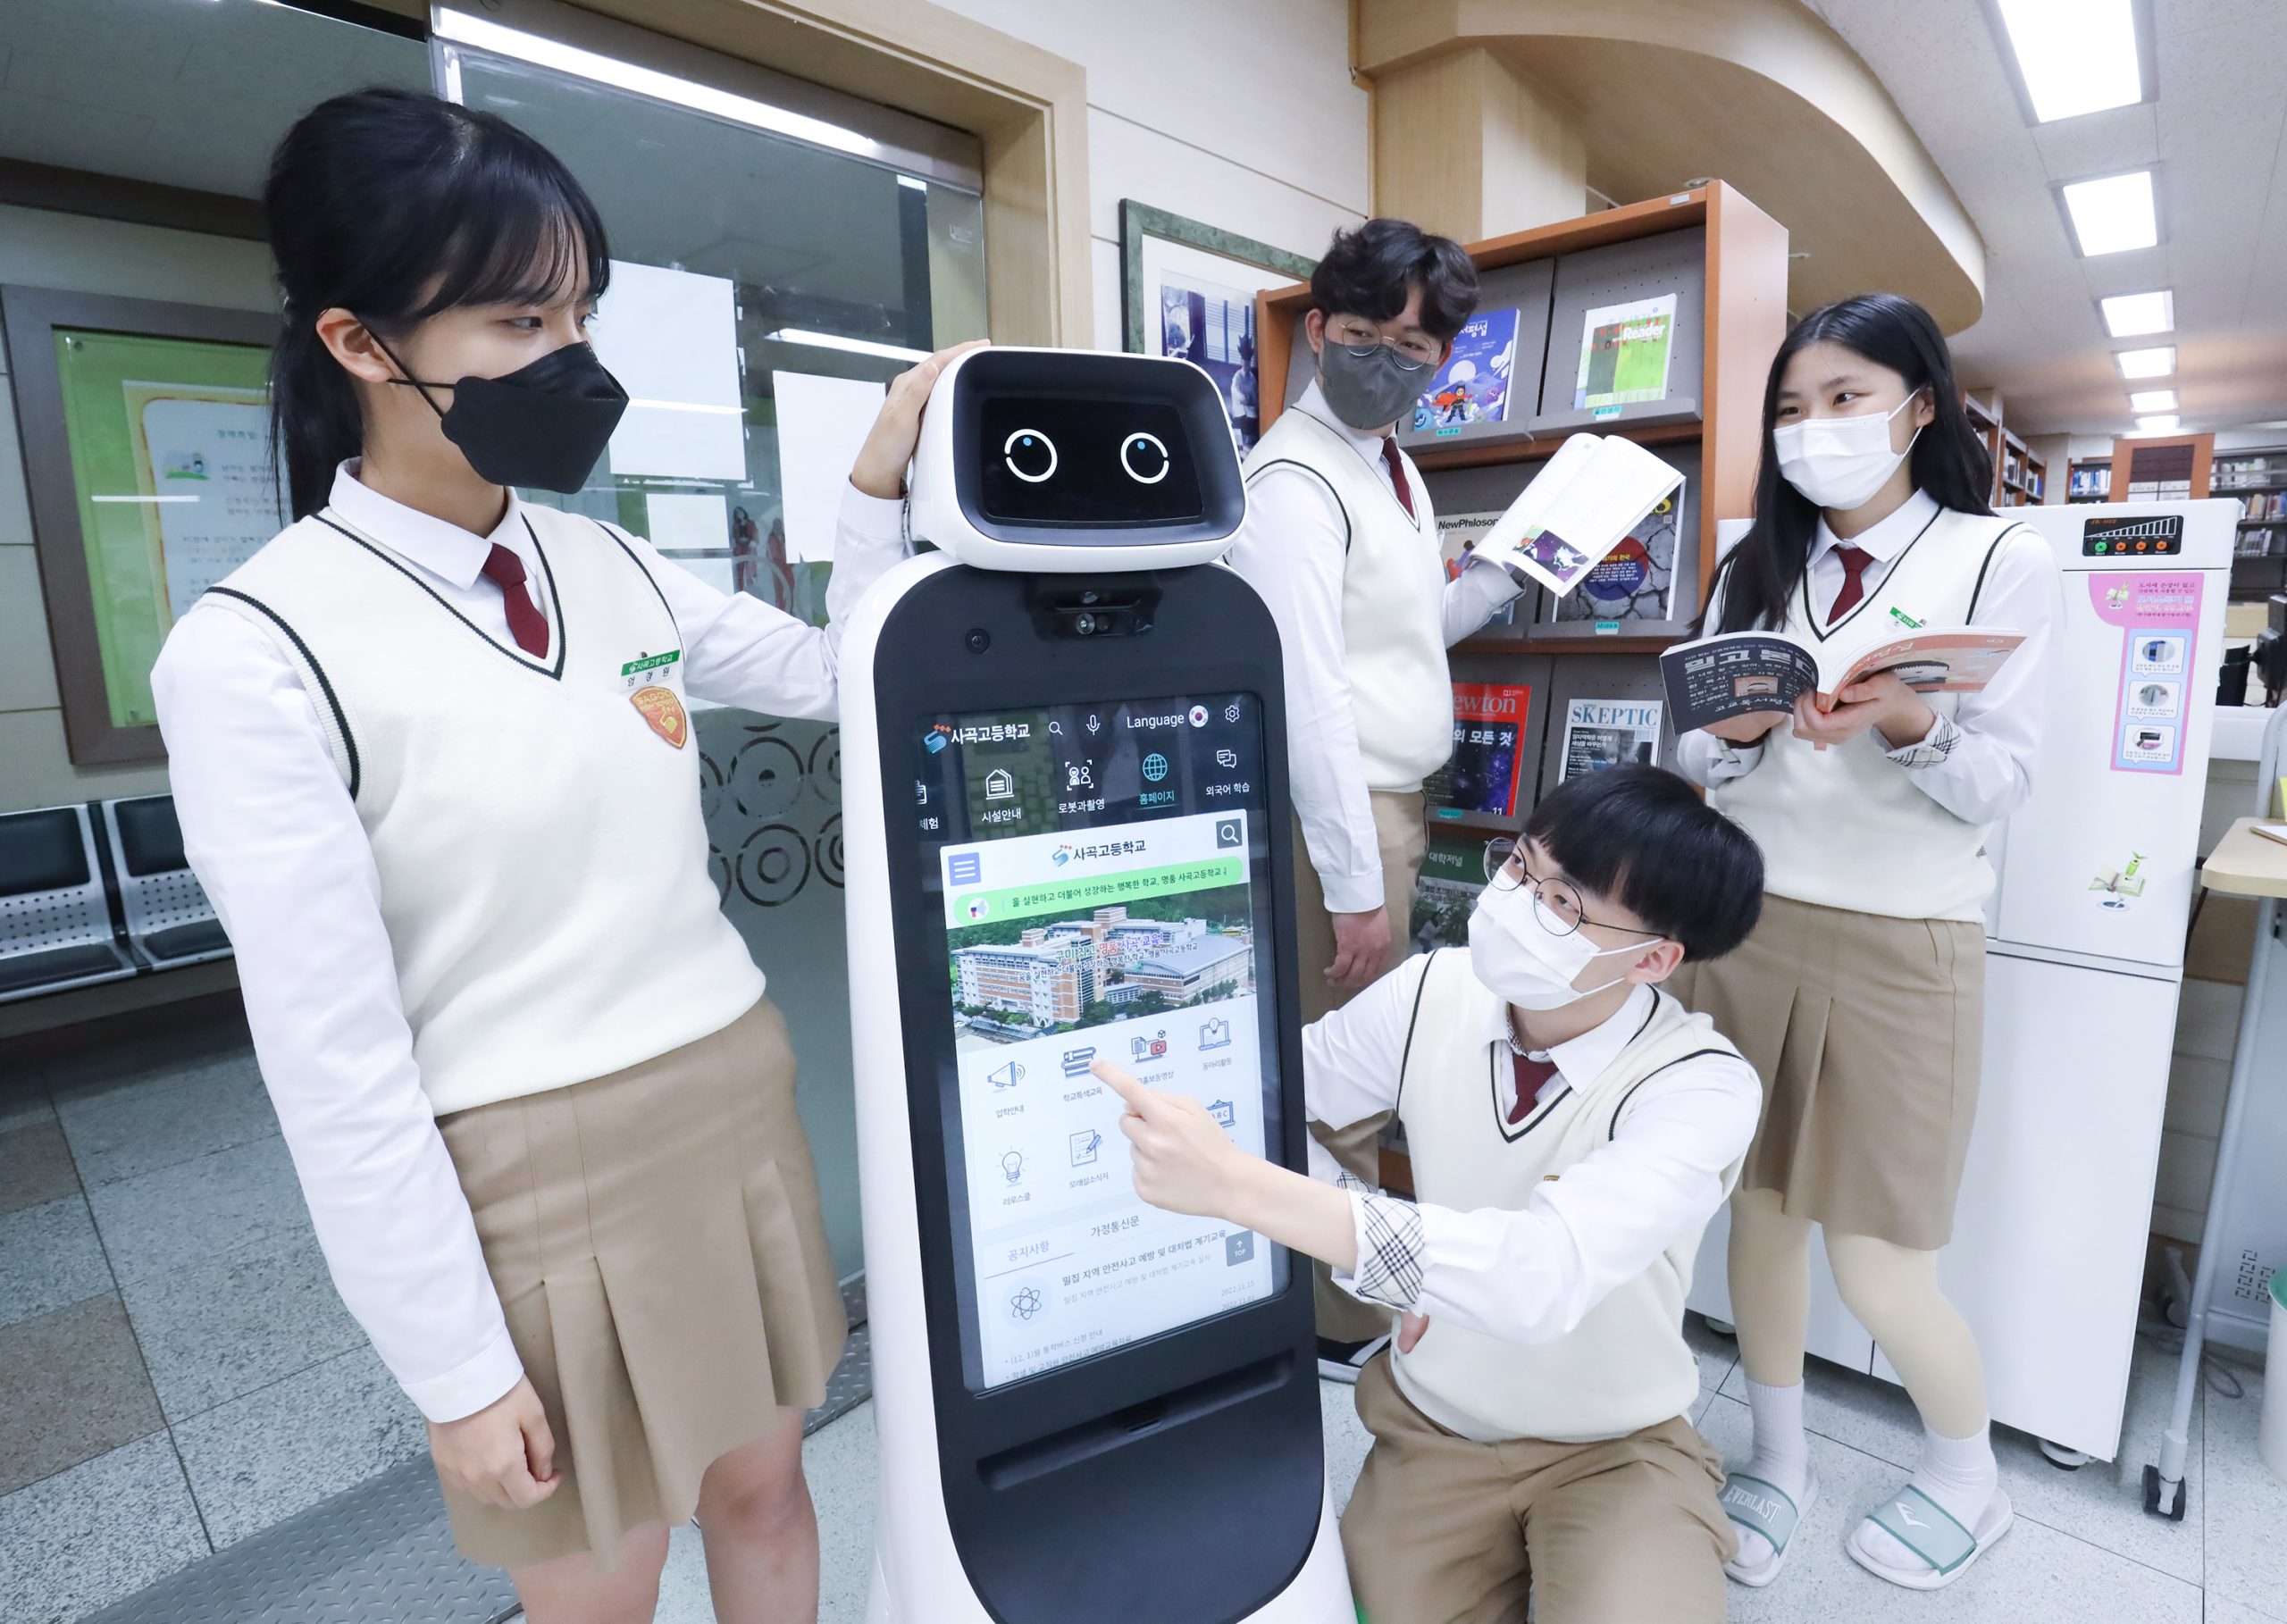 LG전자가 초∙중∙고등학교에 학생들의 디지털 교육을 위해 LG 클로이 가이드봇을 공급한다. 경북 구미시 사곡고등학교에서 학생들이 LG 클로이 가이드봇을 체험하고 있다.